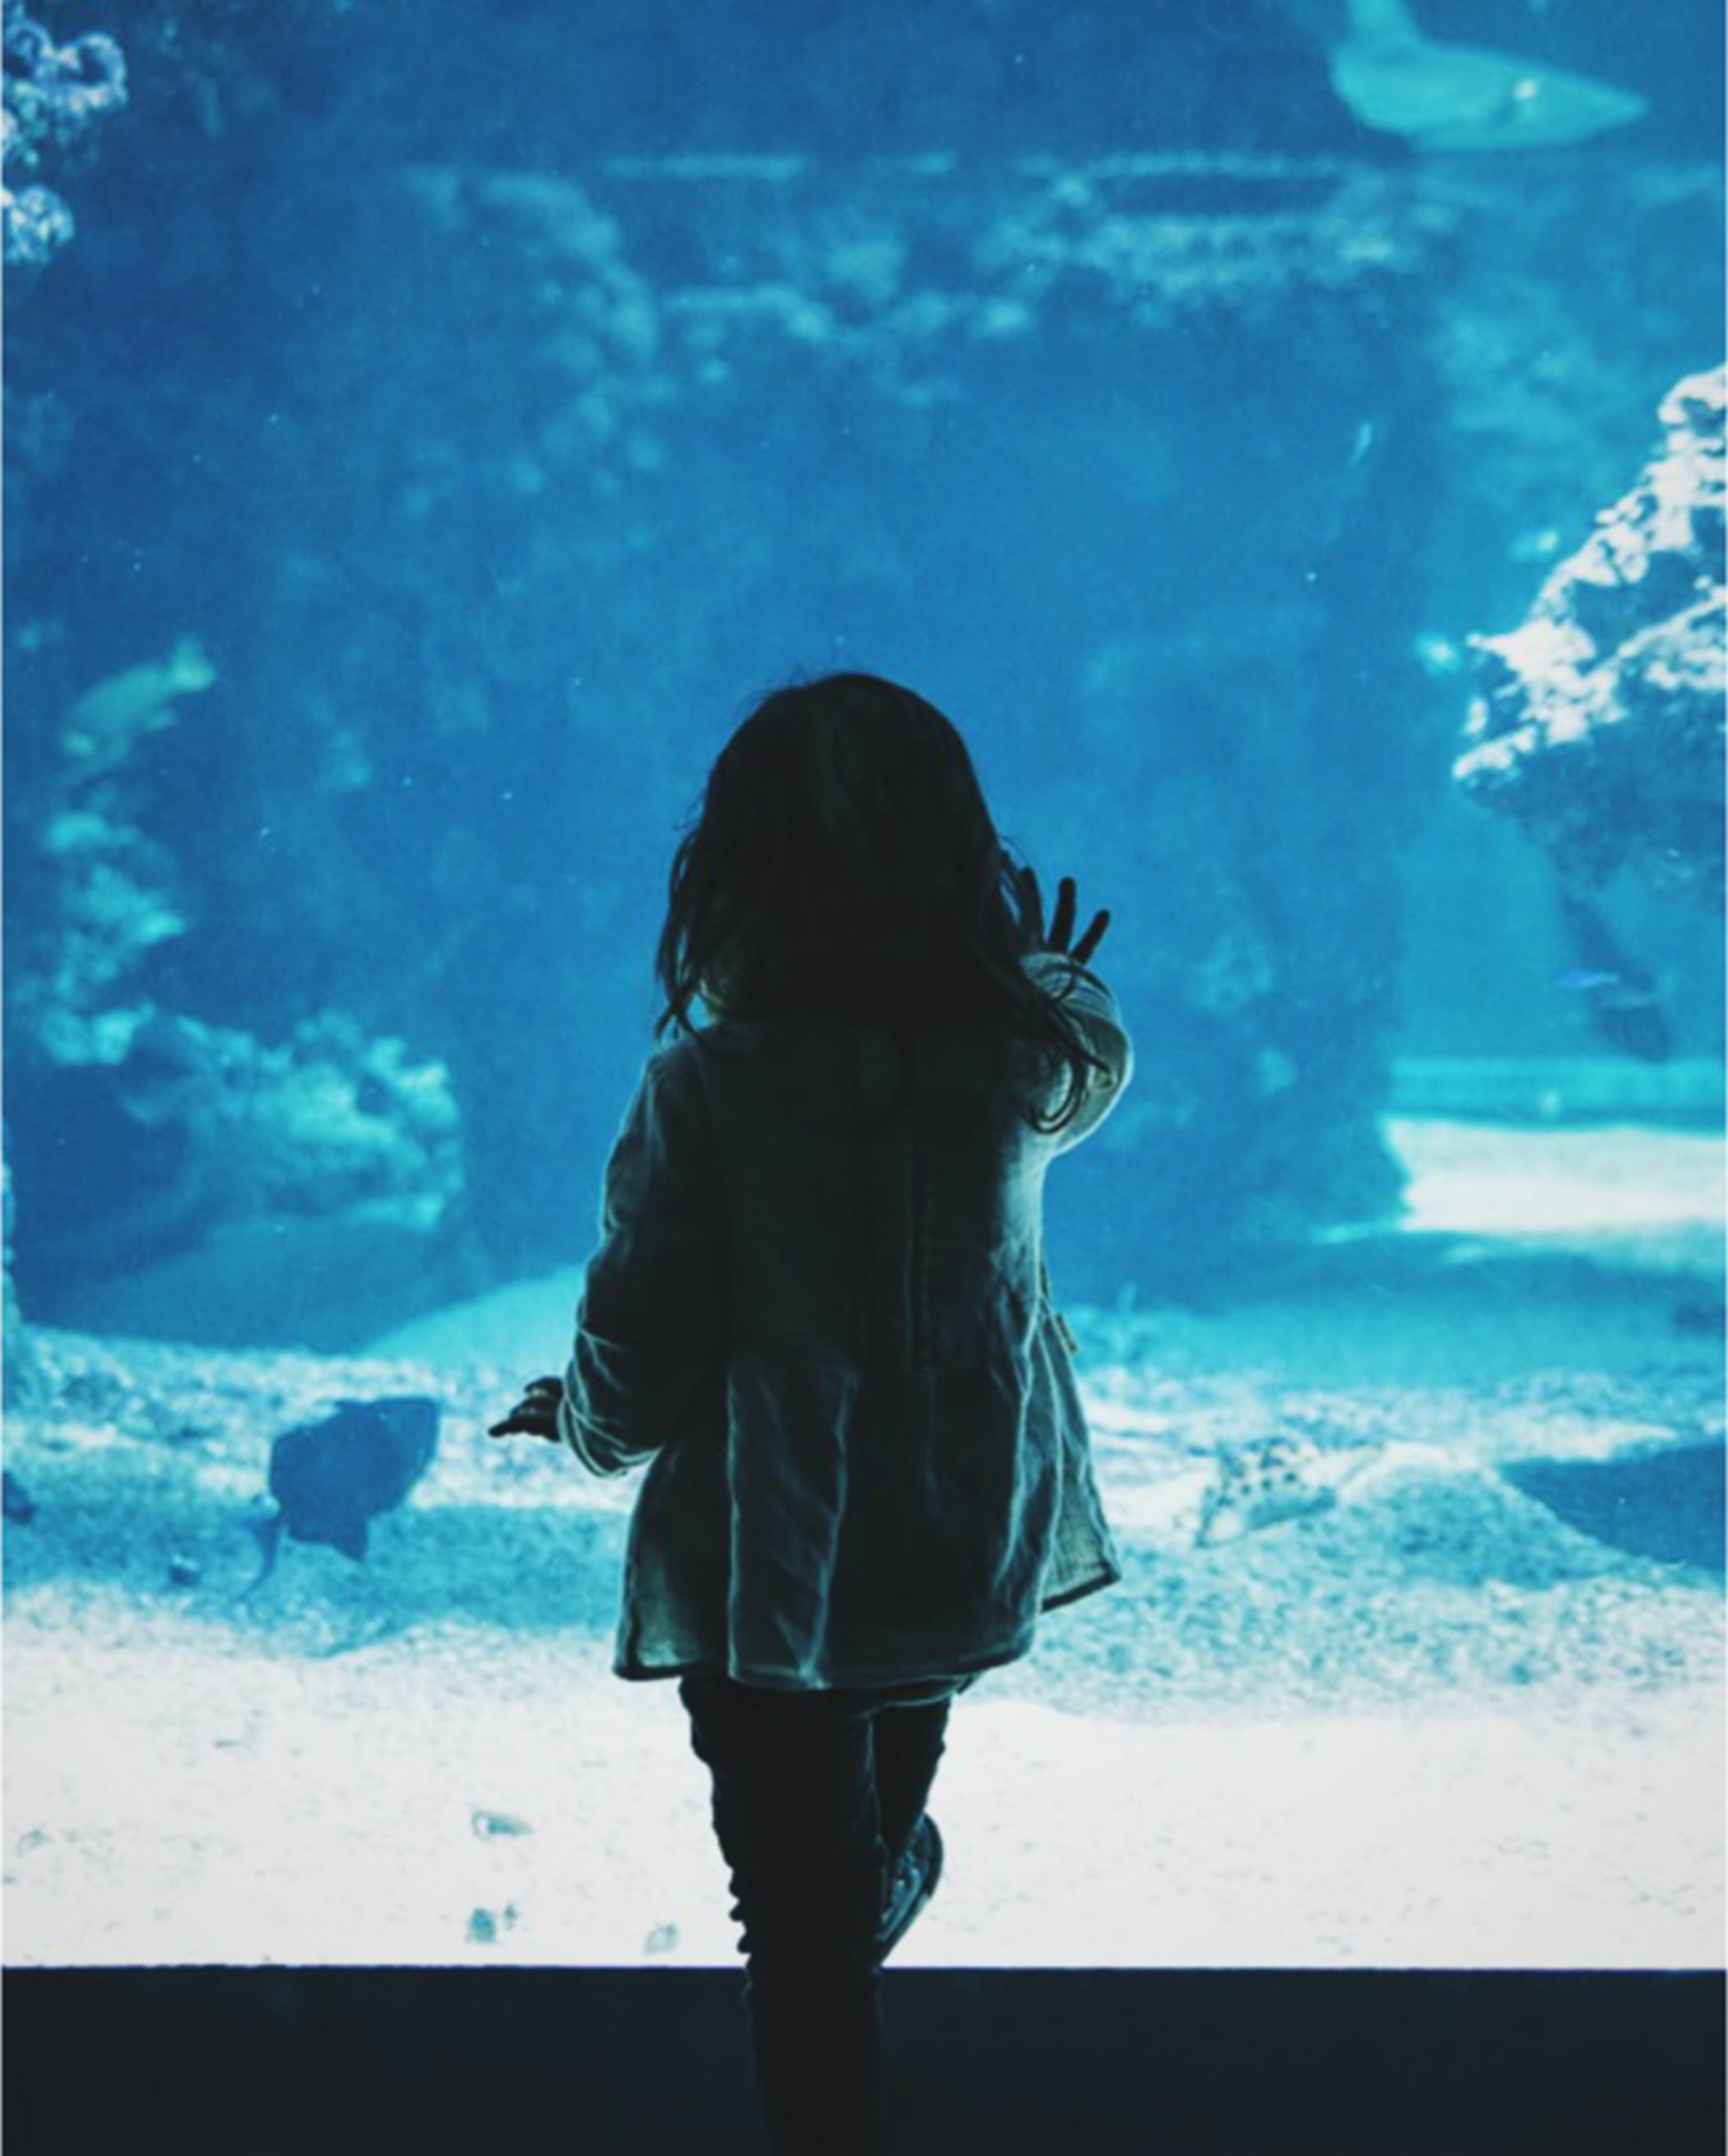 A child looking into an aquarium